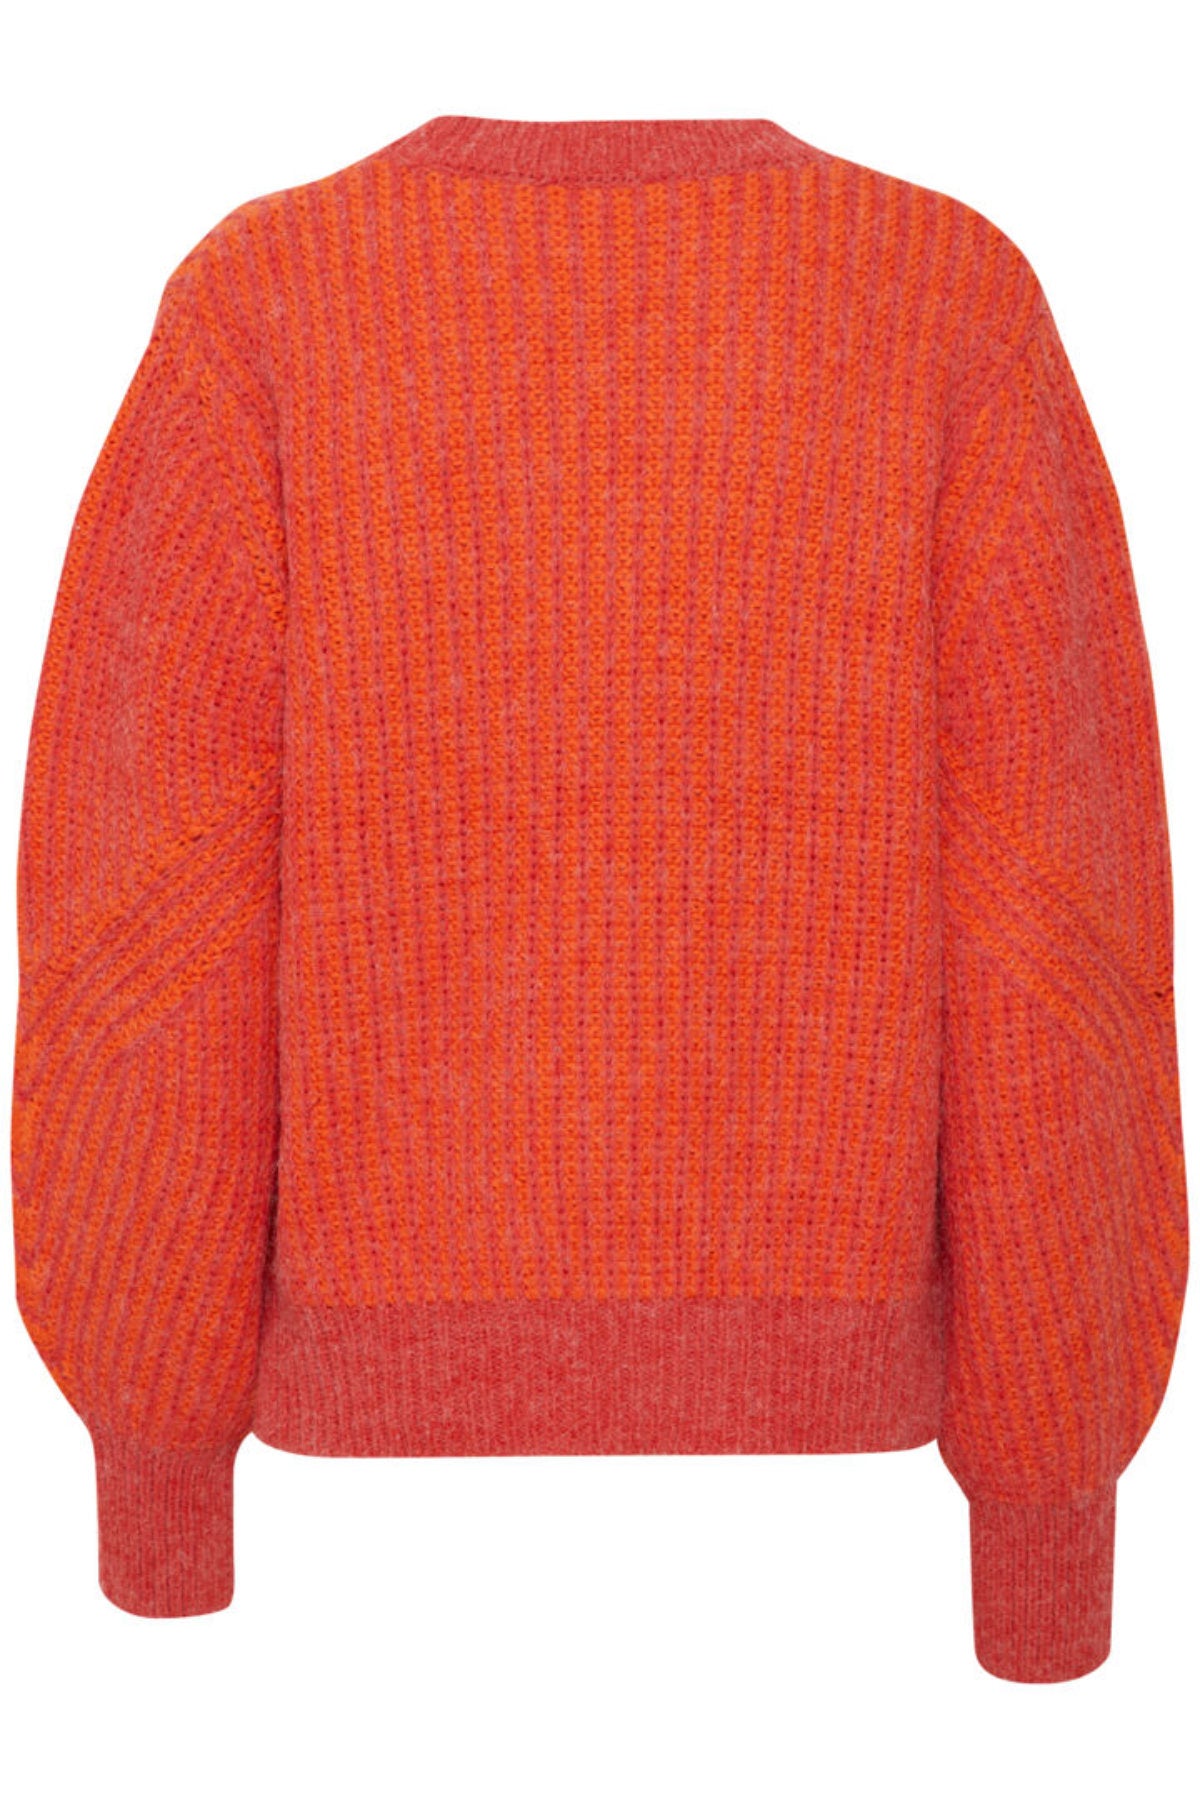 Millox jumper, orange